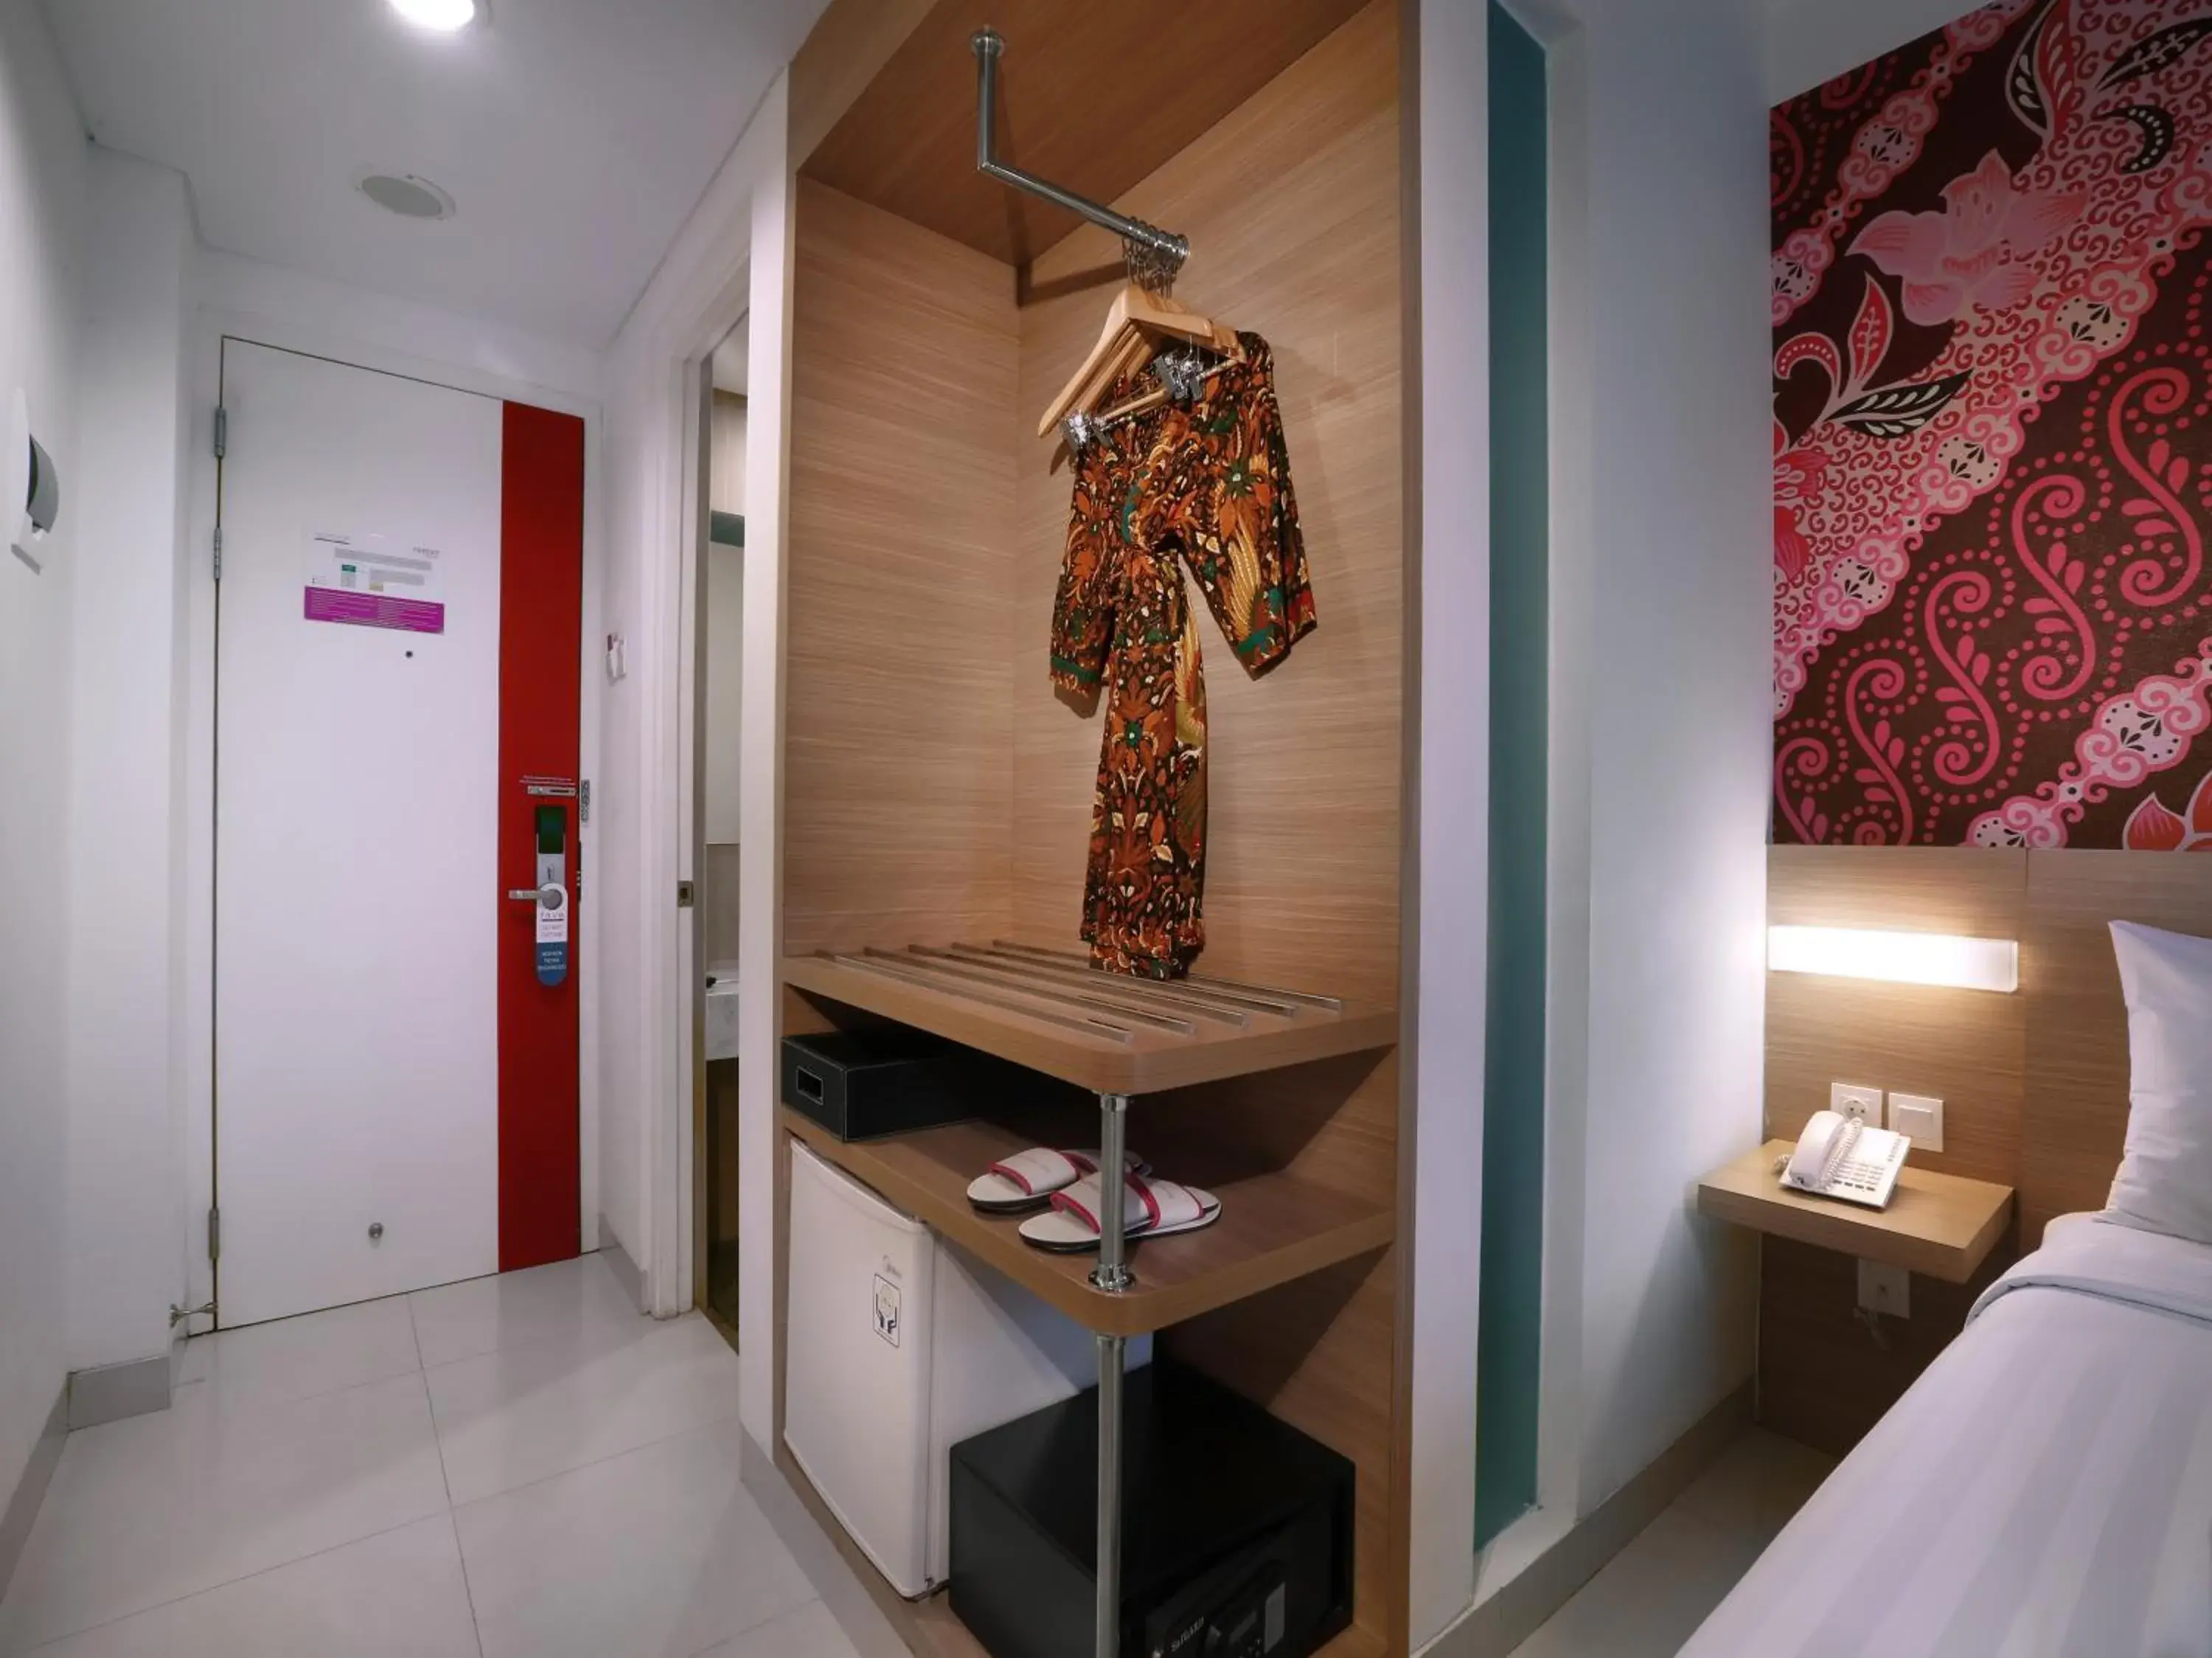 Area and facilities, Bathroom in Favehotel Malioboro